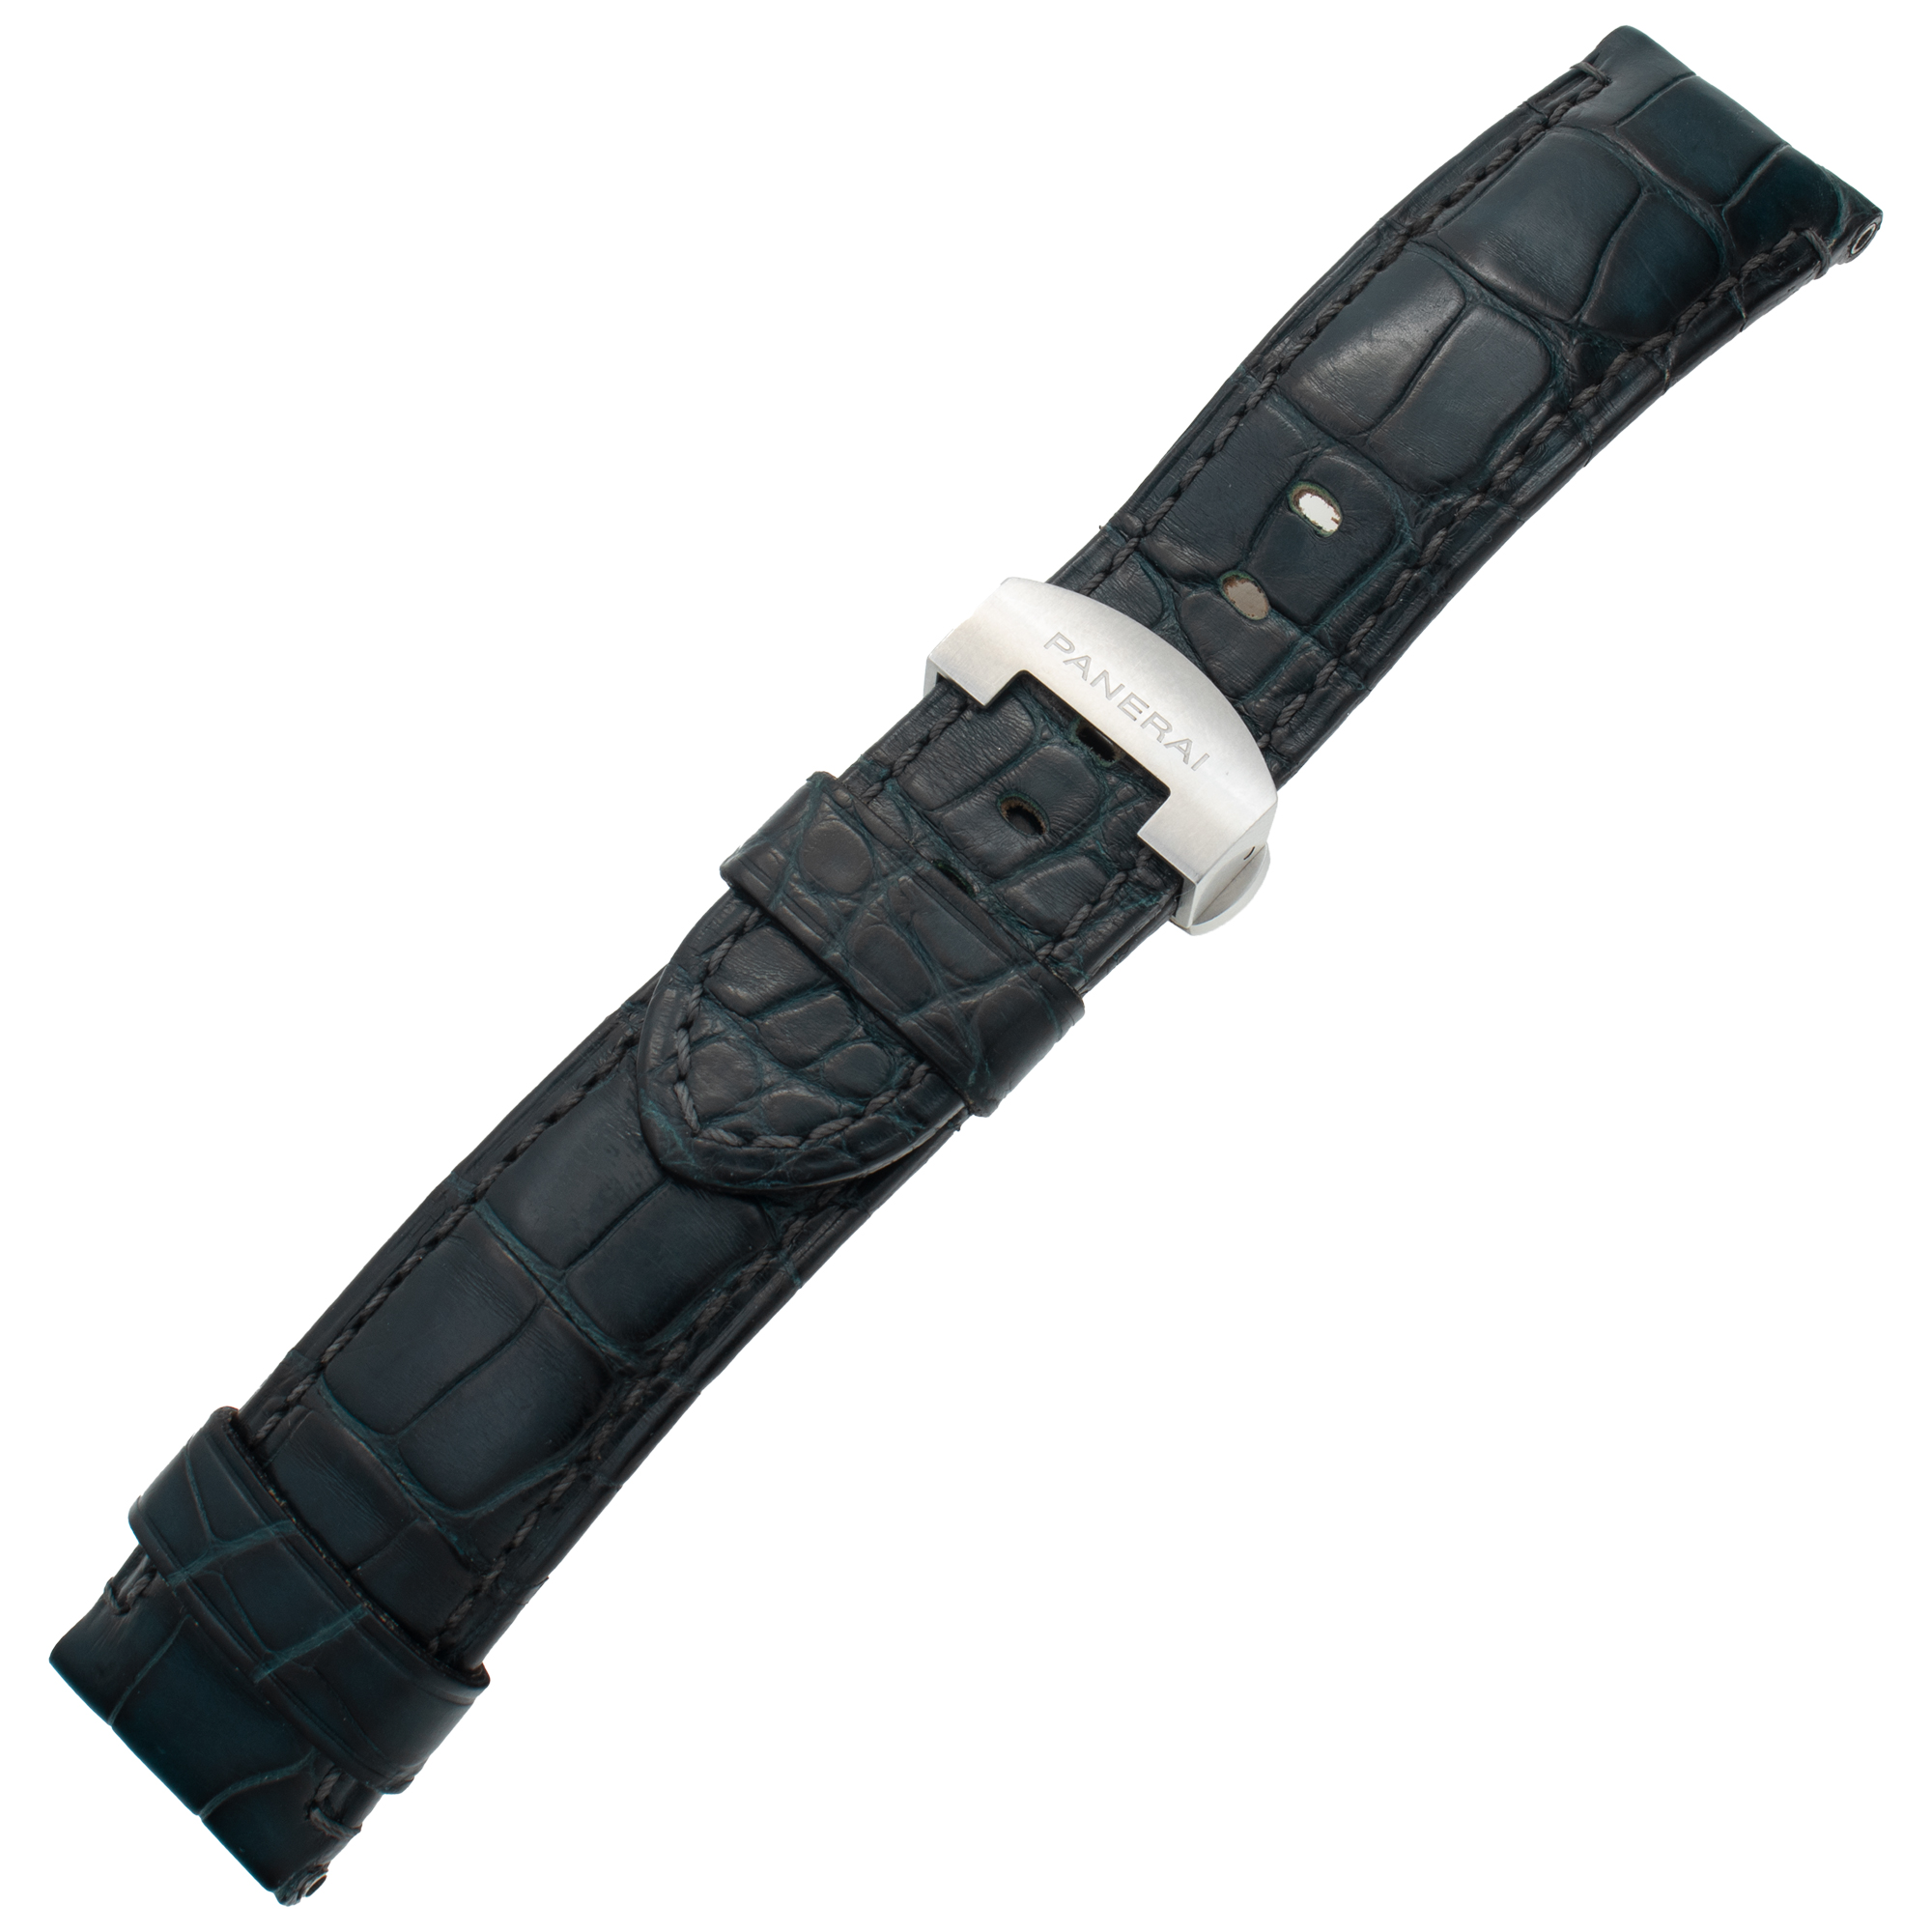 Gently worn Panerai black alligator strap with original Panerai deployant buckle image 1